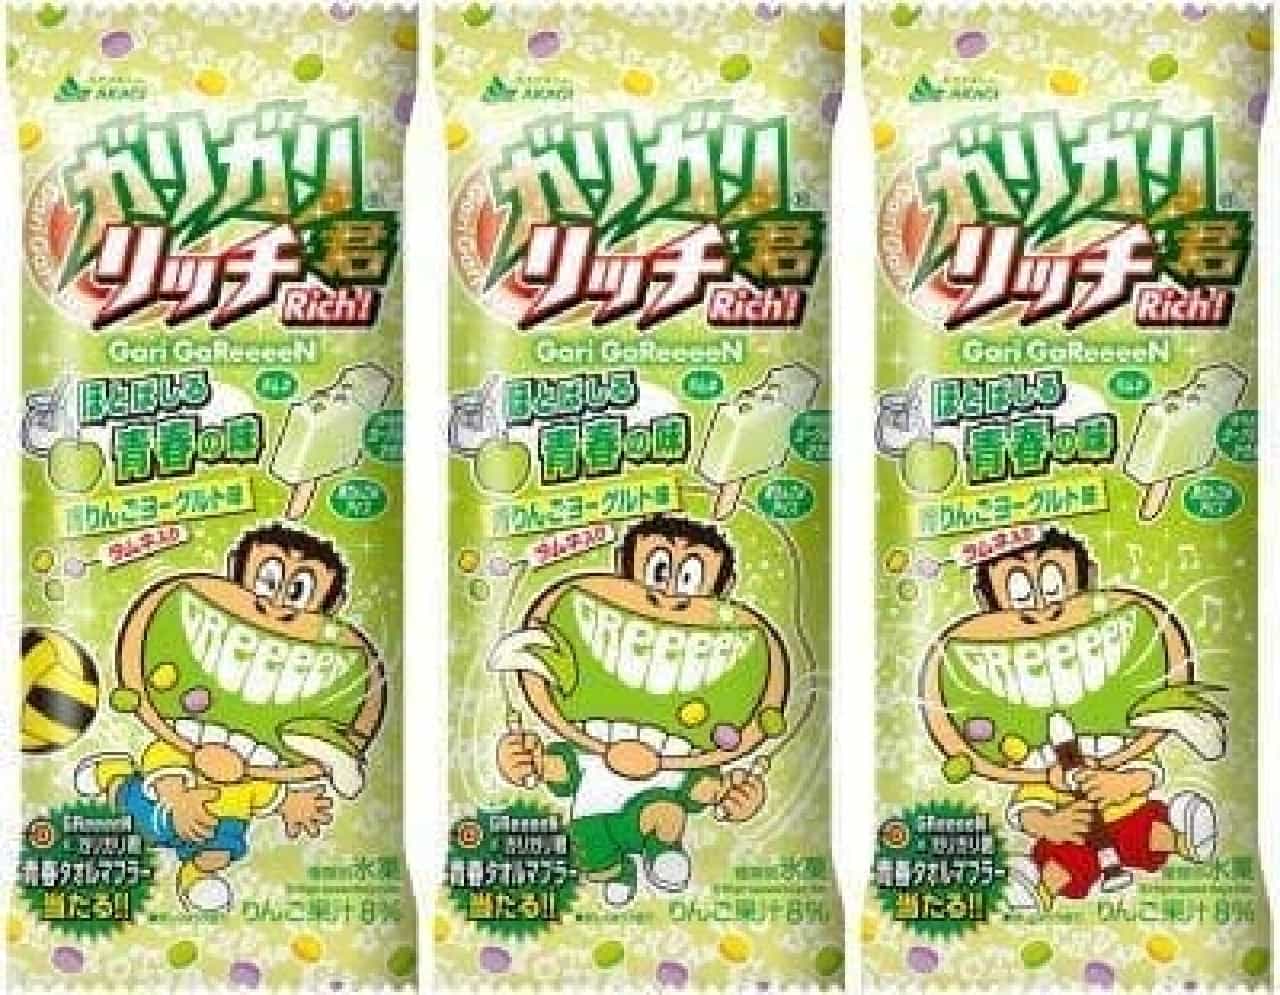 "Gari-gari-kun rich squirting youth taste (green apple yogurt taste)"